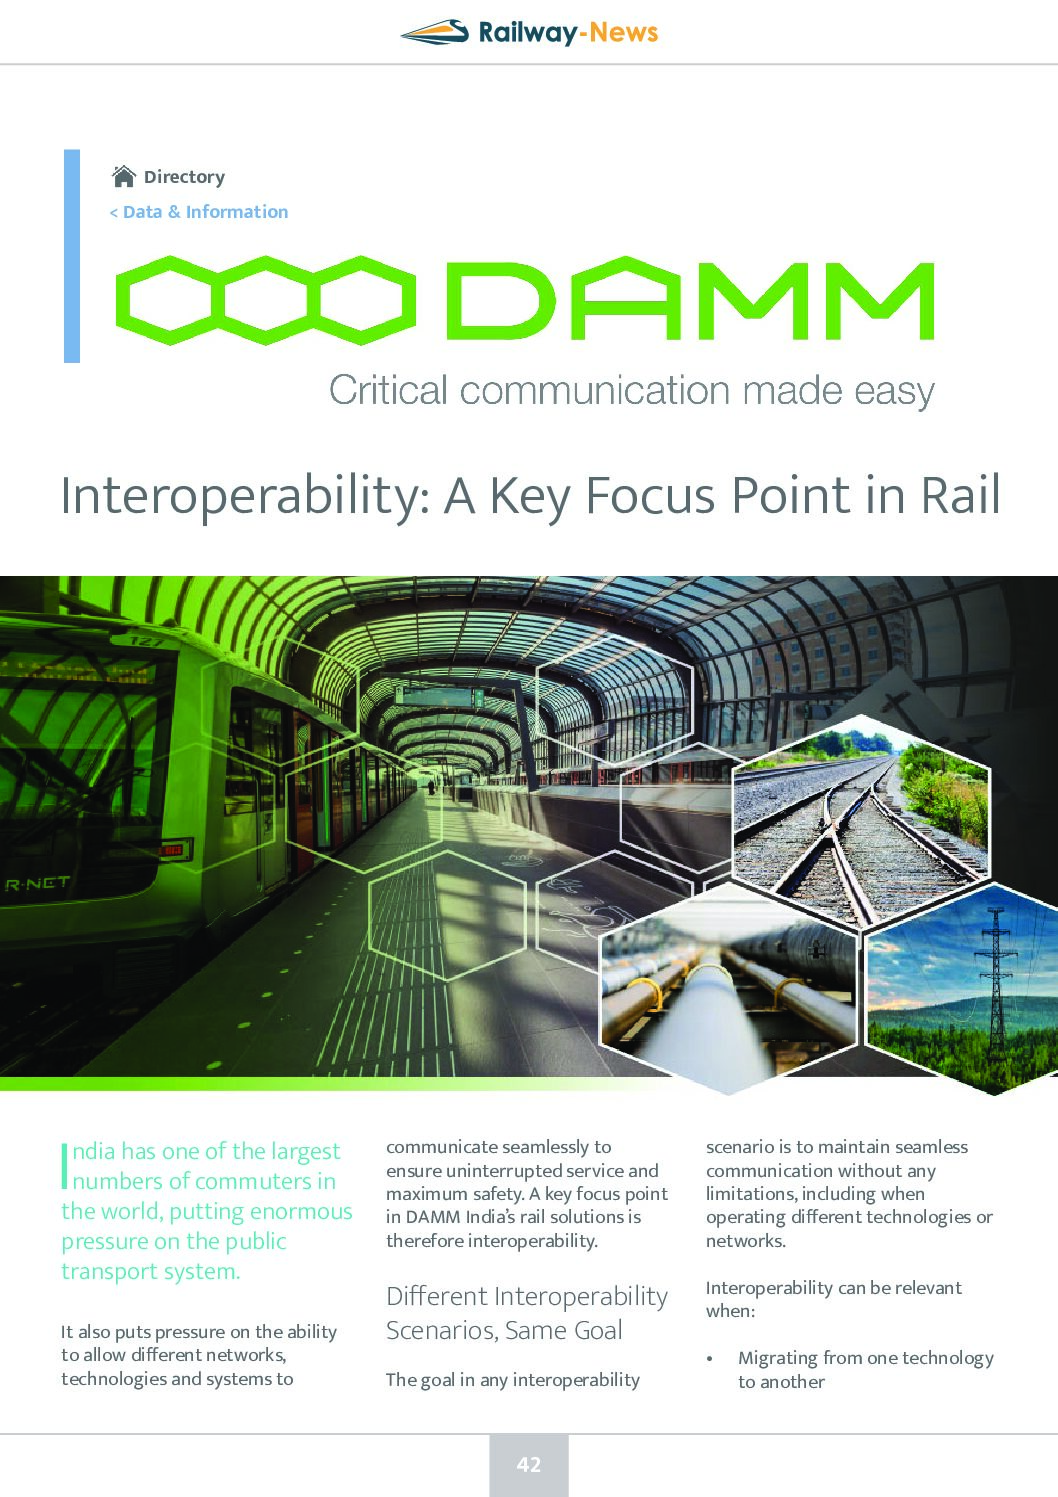 Interoperability: A Key Focus Point in Rail